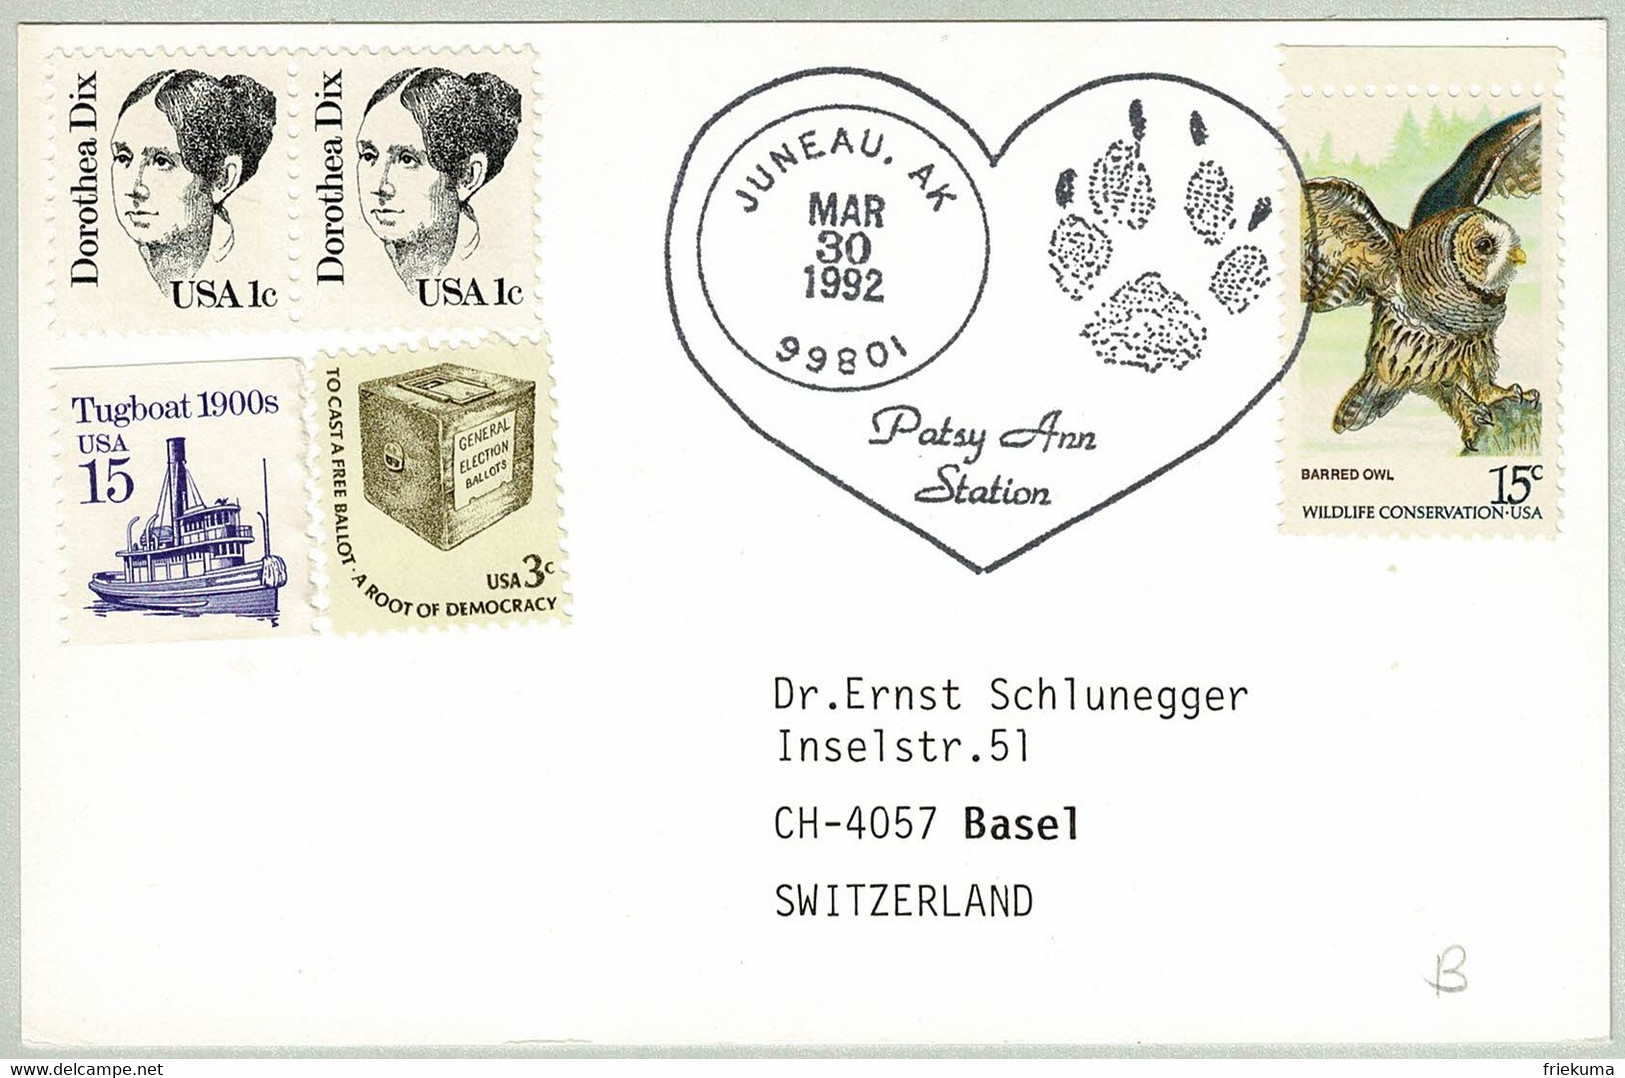 USA 1992, Postkarte Patsy Ann Station Juneau - Basel (Schweiz), Barred Owl - Cani